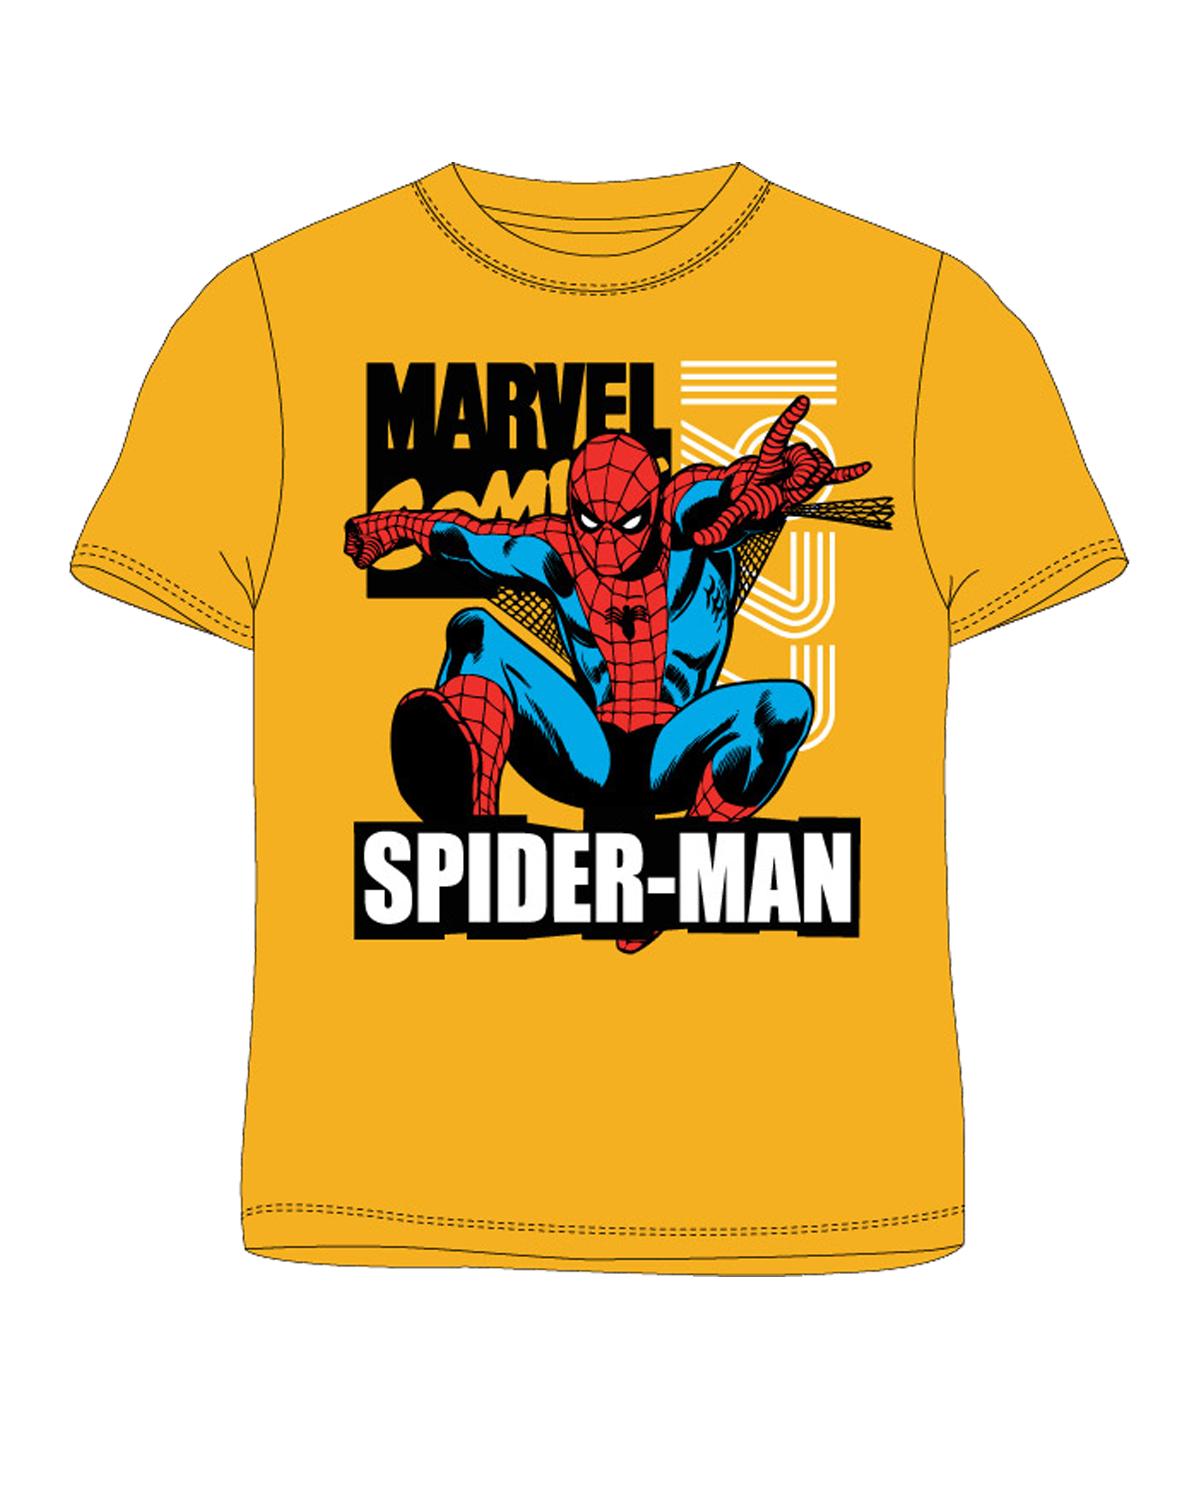 Spider Man - licence Chlapecké tričko - Spider-Man 52021447, žlutá Barva: Žlutá, Velikost: 128